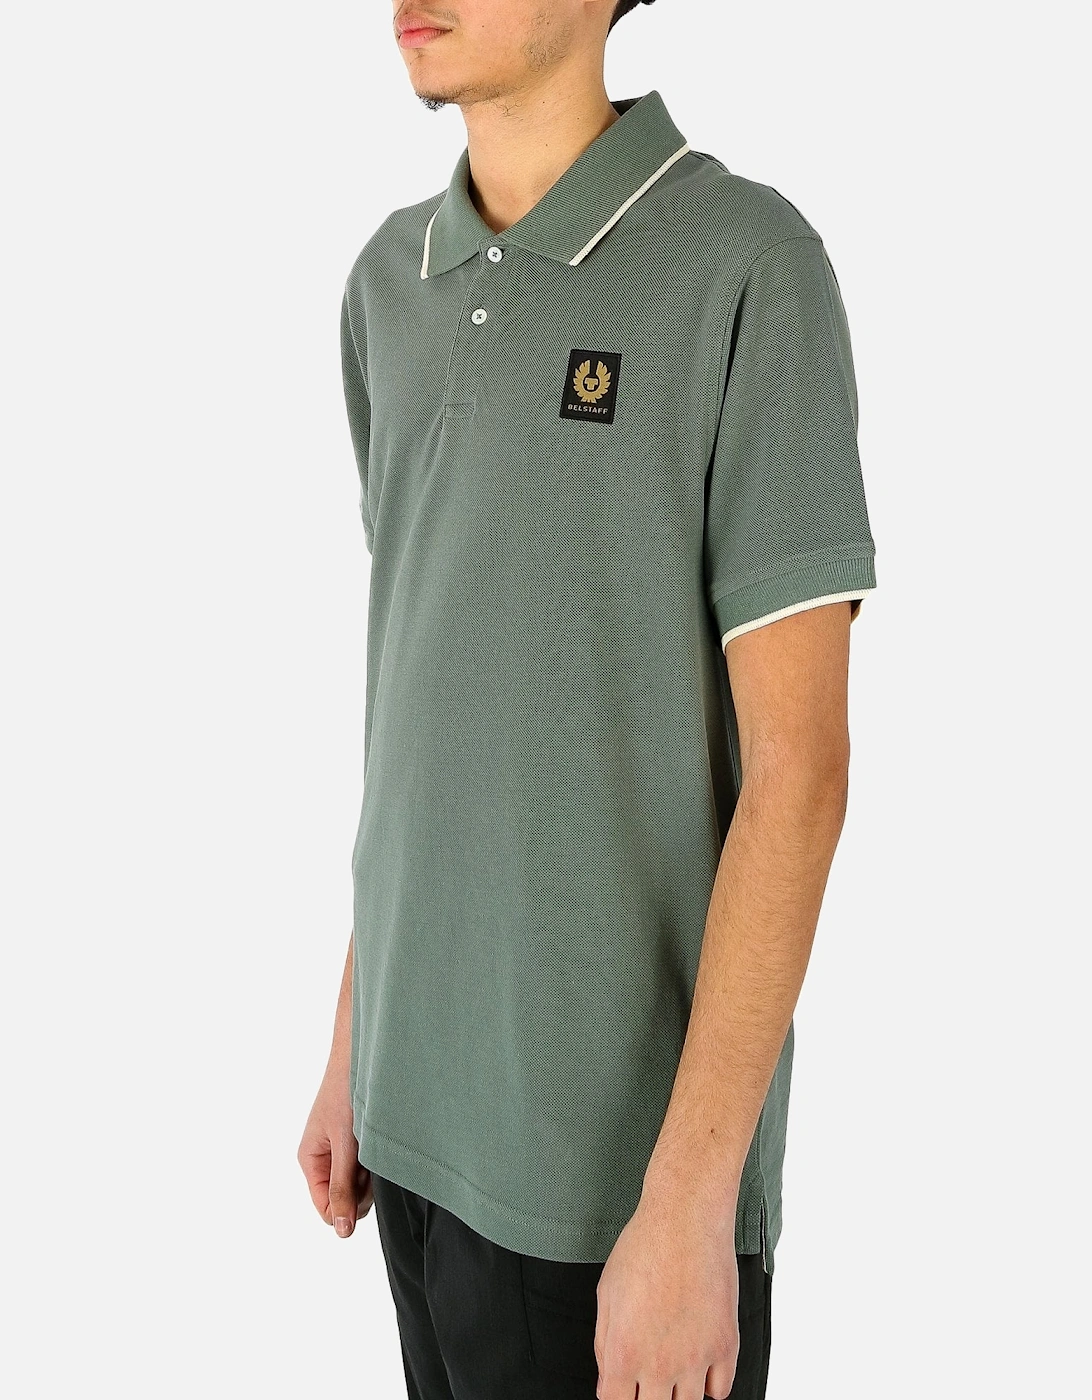 Tipped Green Polo Shirt